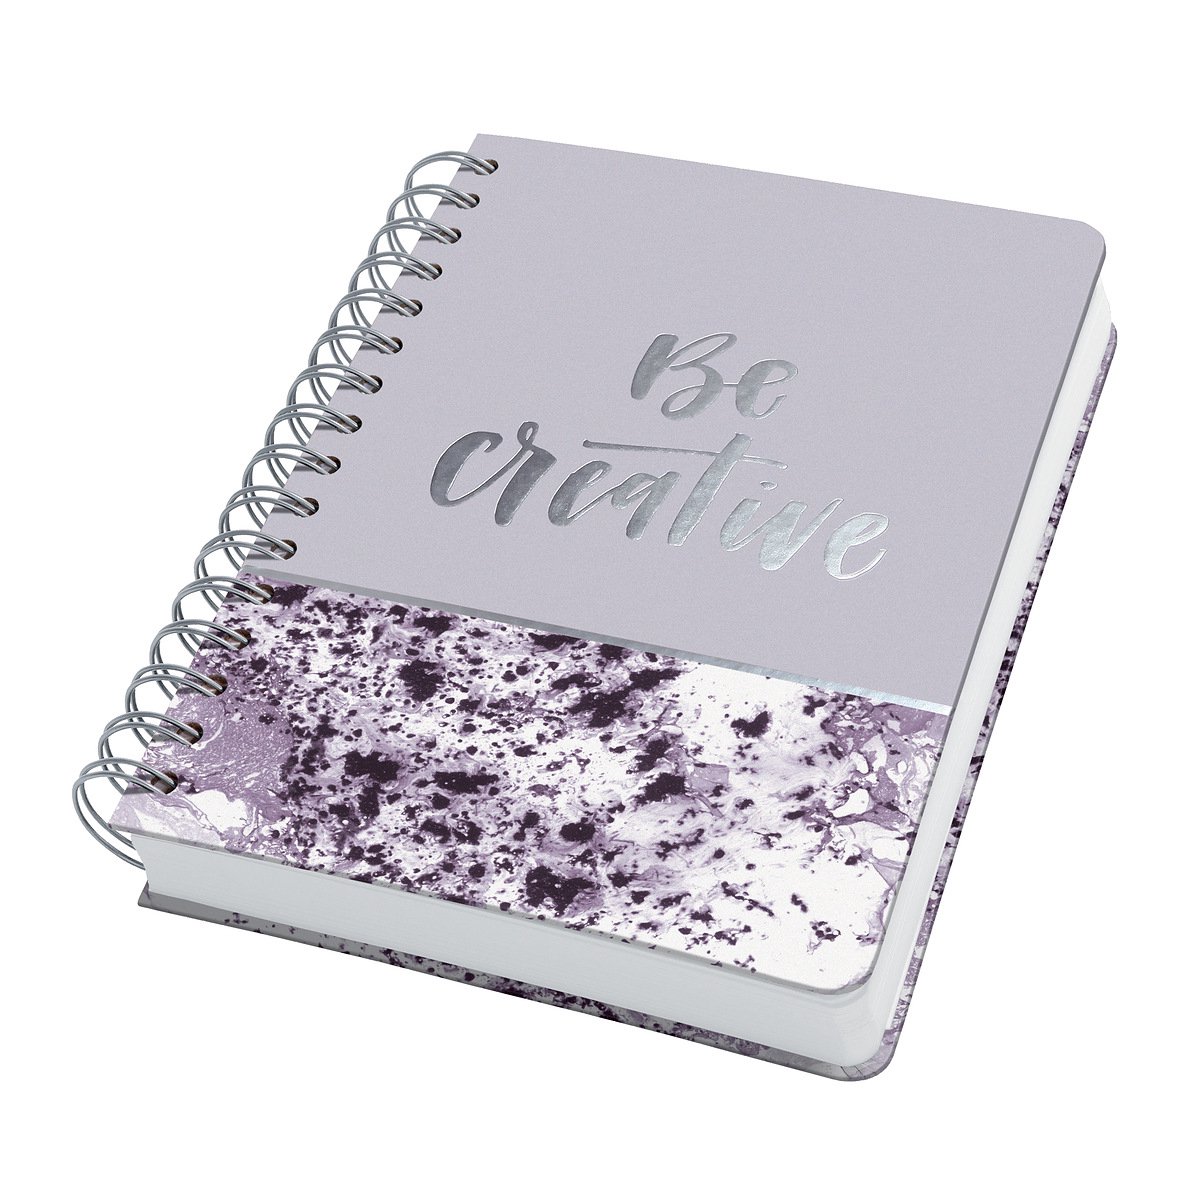 Sigel - spiraal notitieboek - A5 - Jolie - hardcover - 240 pagina's - dots - 120 grams papier - Violet Marble - SI-JN607